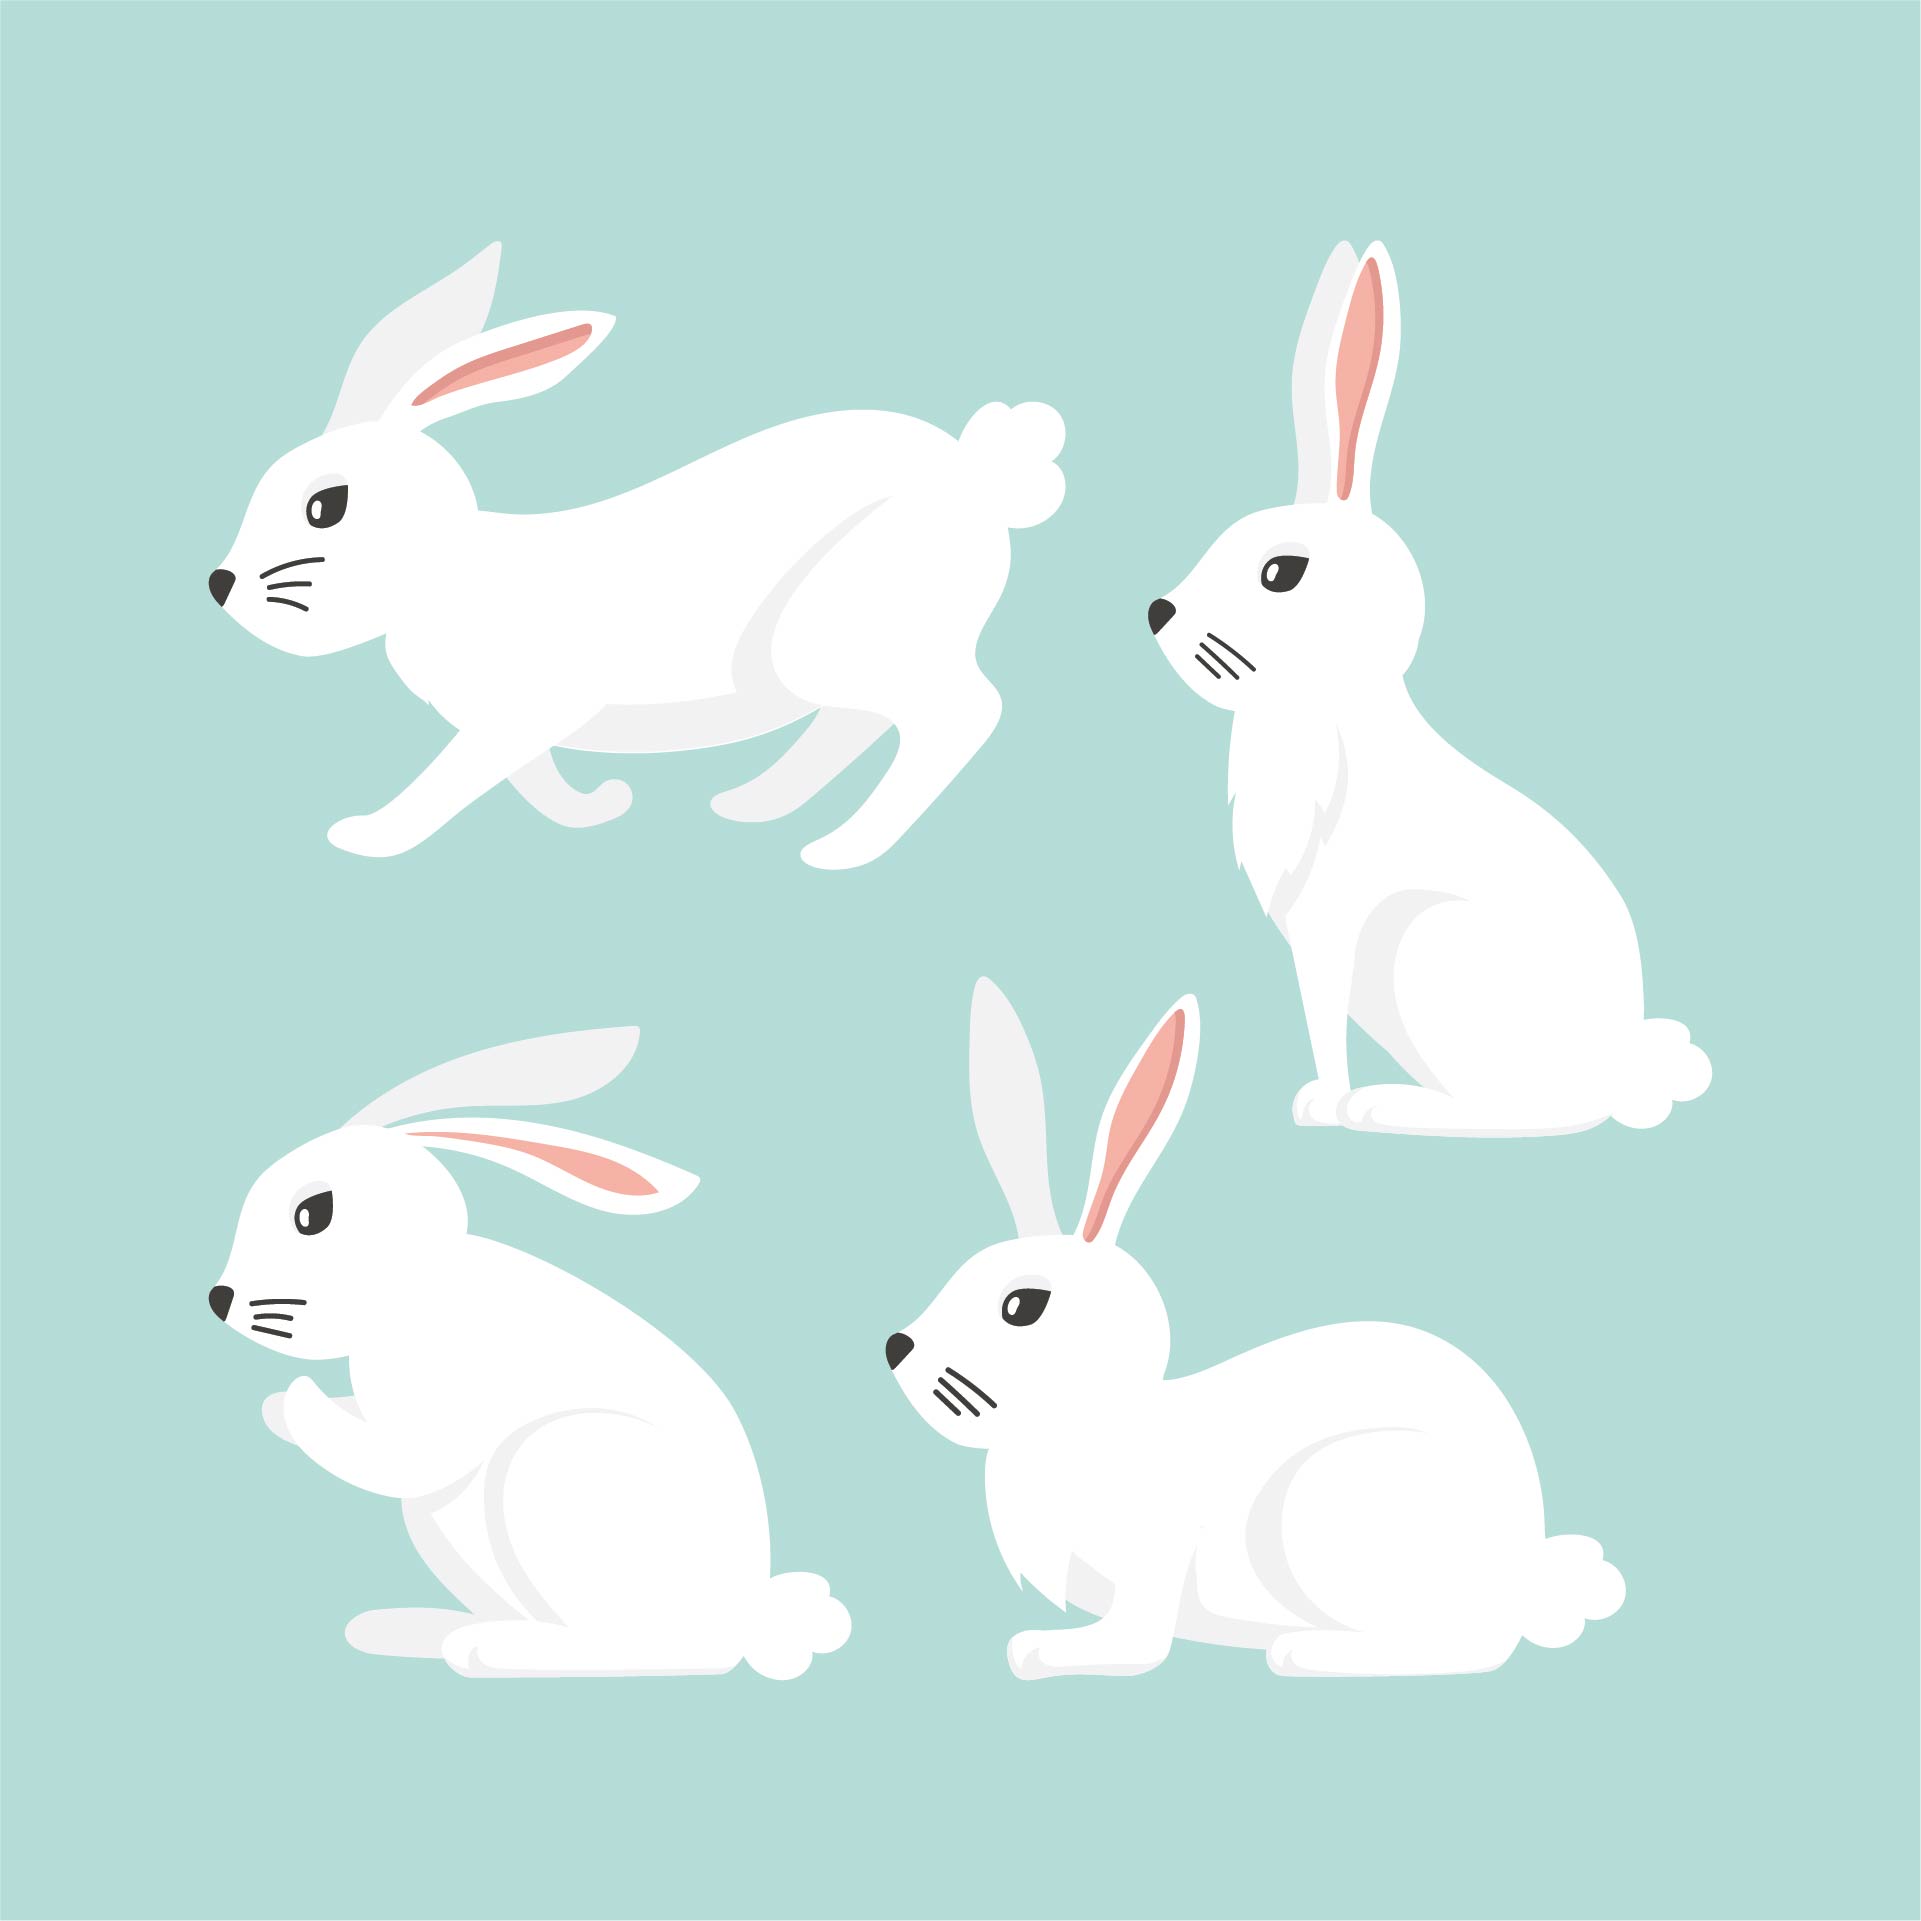 Printables Easter Bunnies